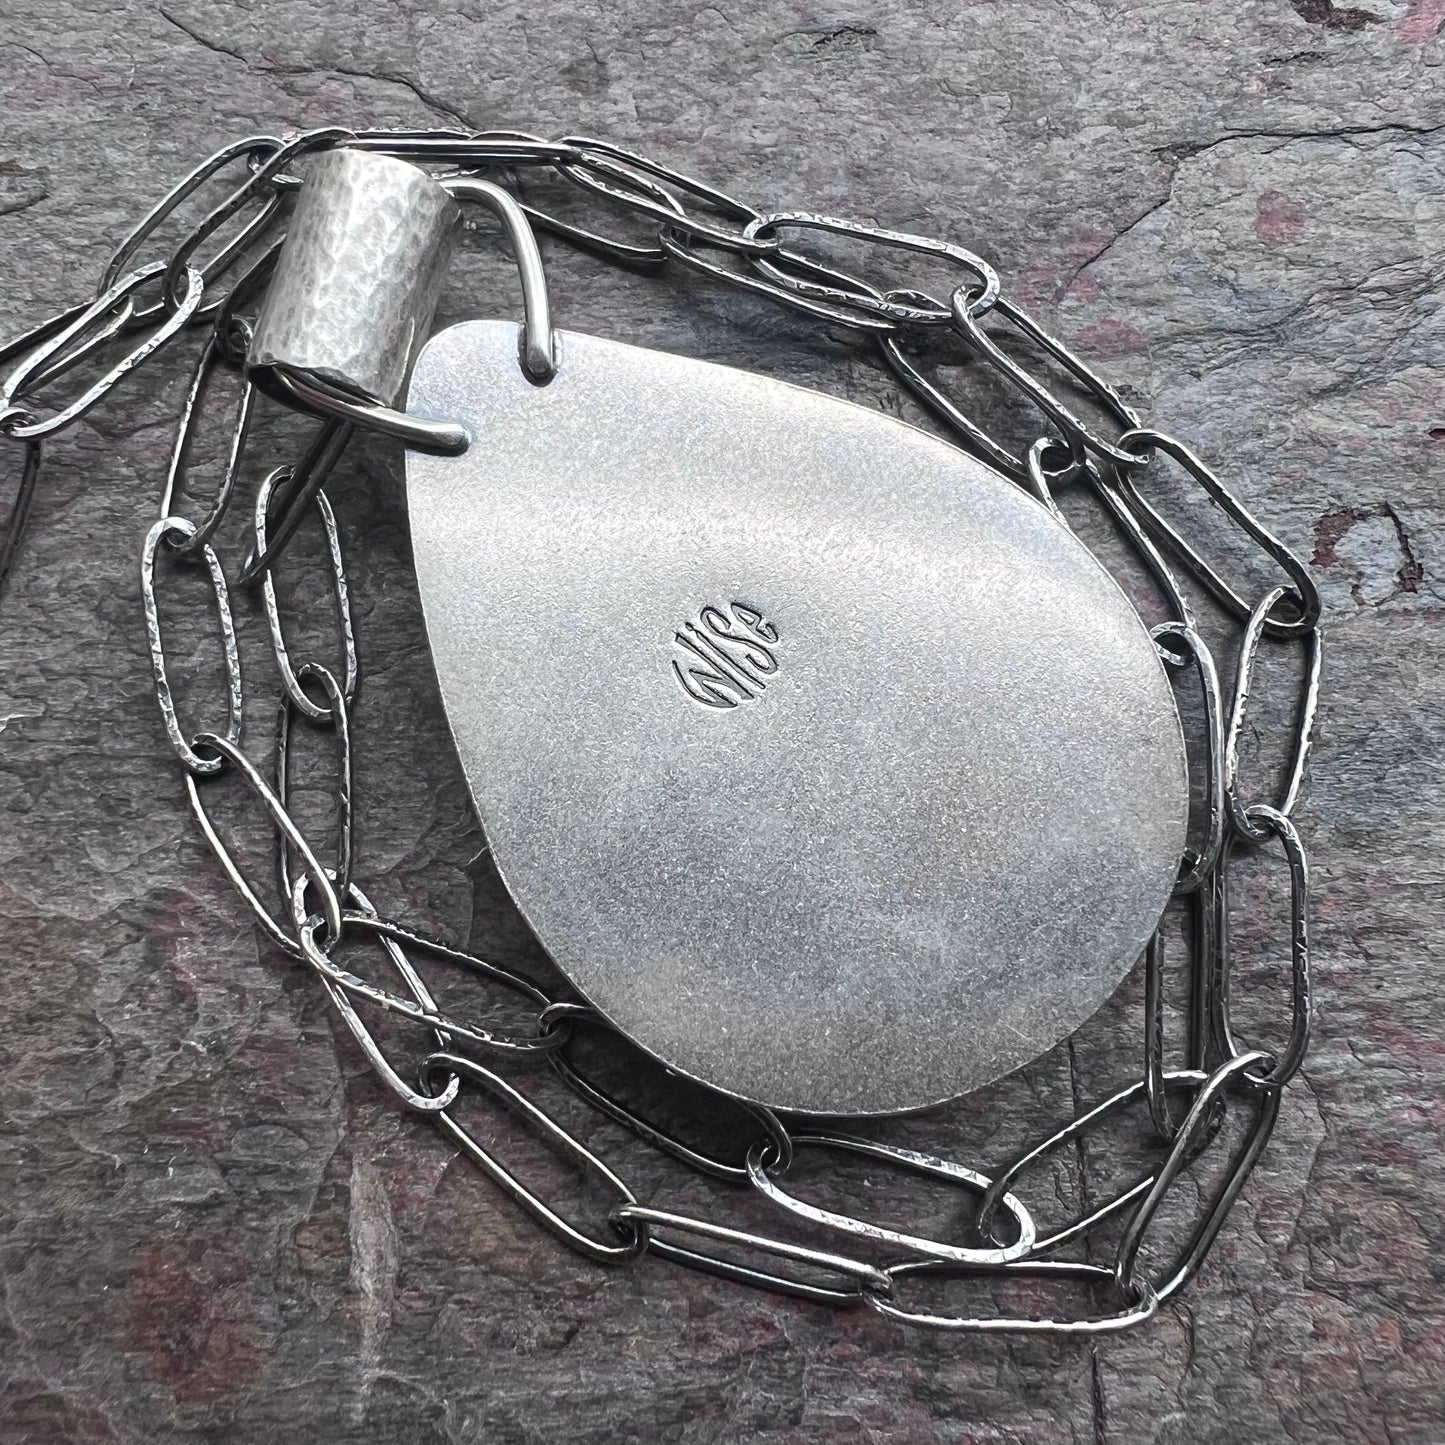 Labradorite Sterling Silver Necklace - Handmade One-of-a-kind Labradorite Teardrop Pendant on Handmade Chain